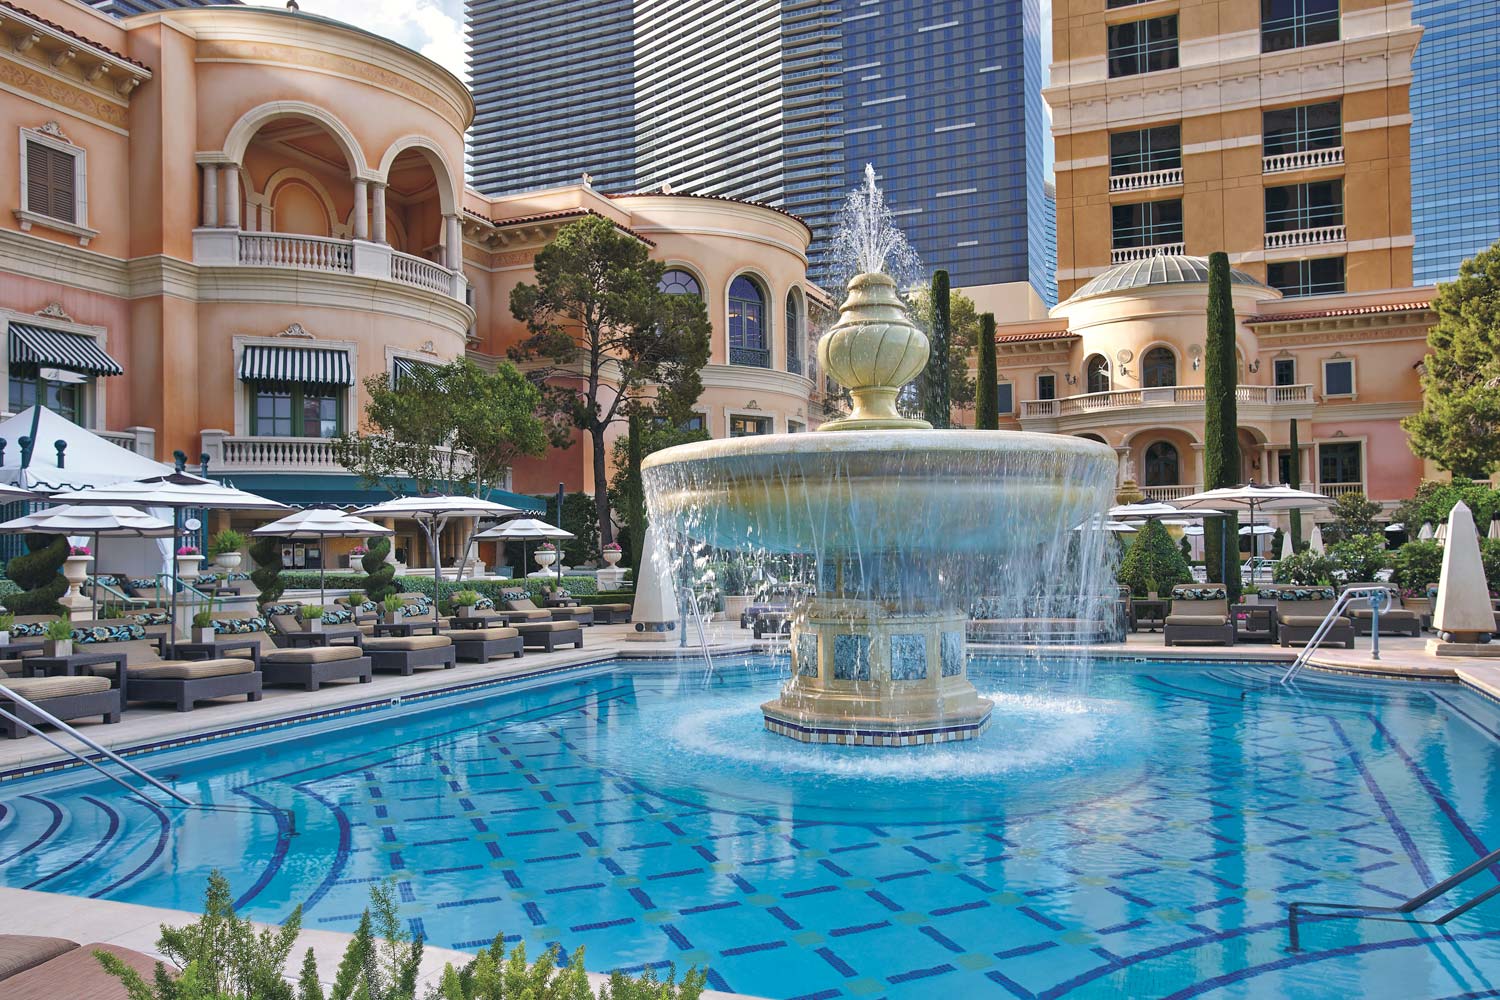 Bellagio Las Vegas Review: Still a luxury hotel? - Luxury on Points